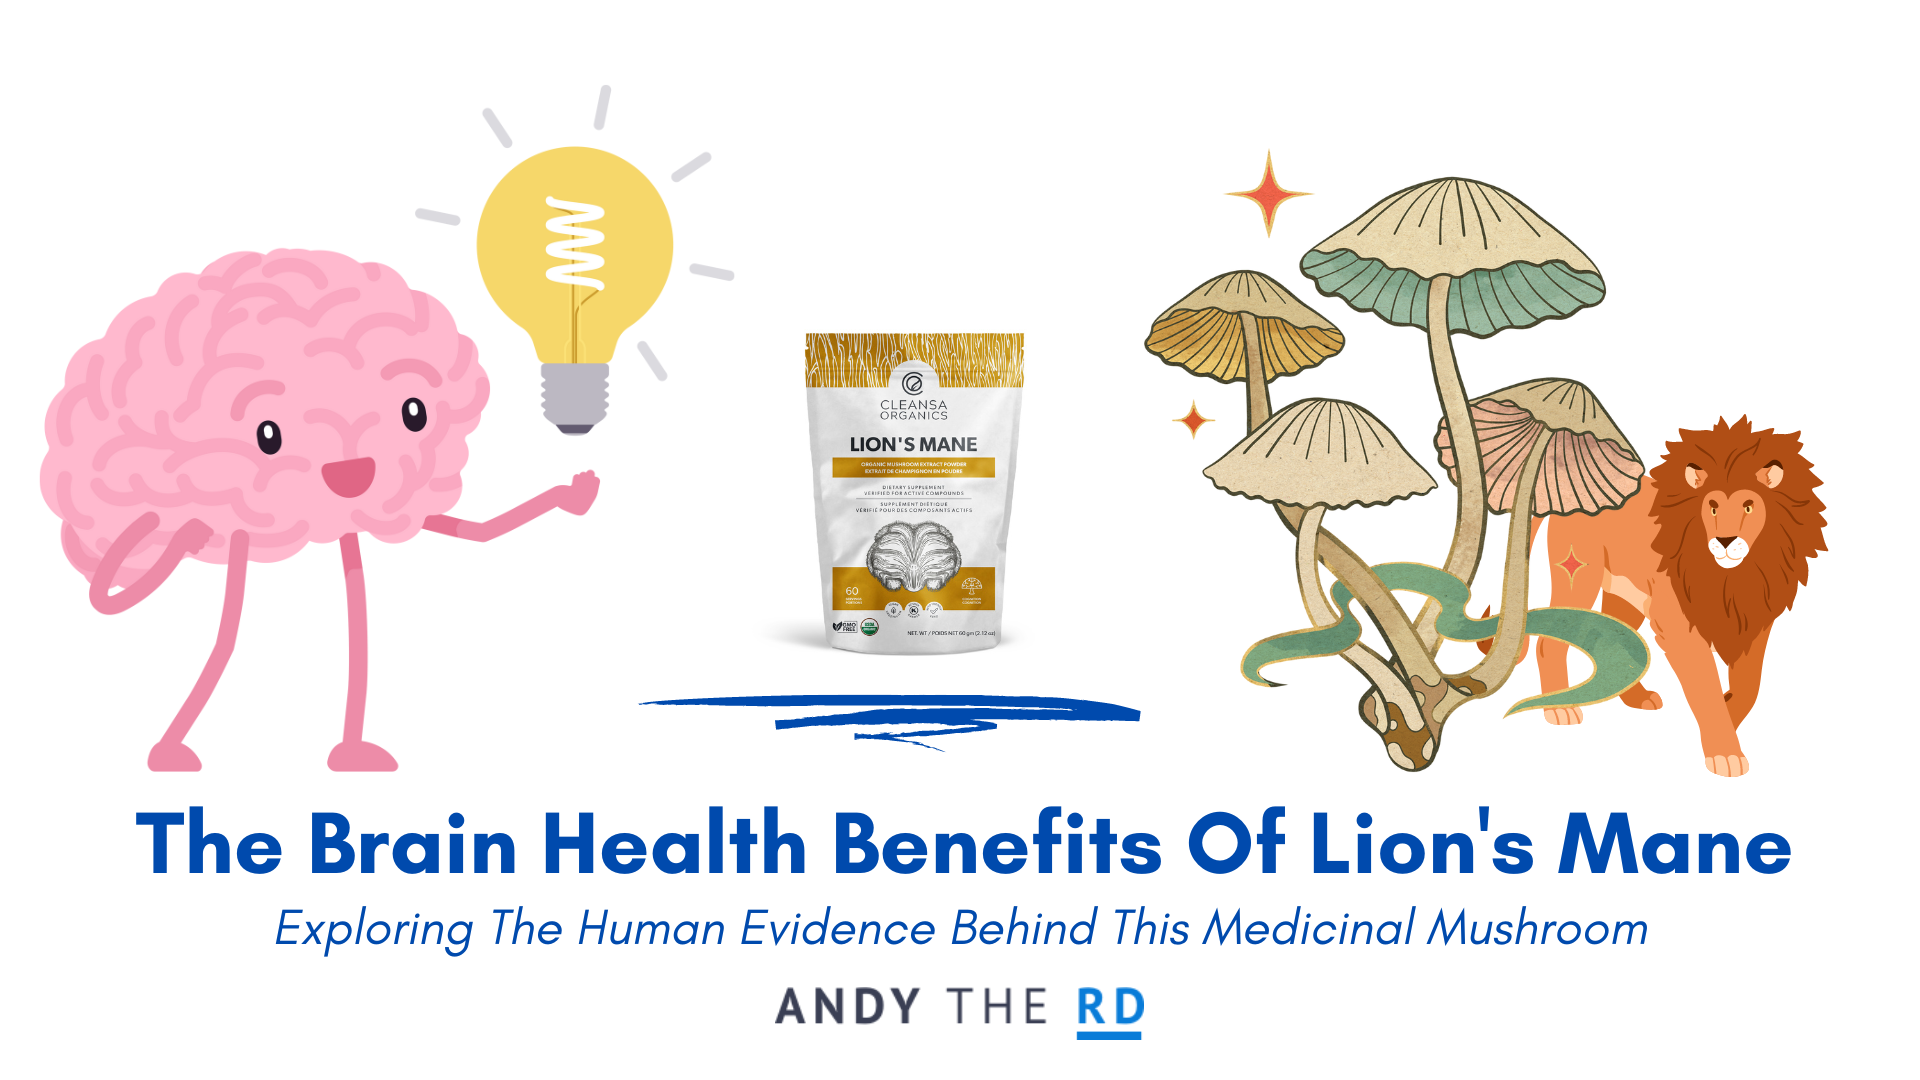 The Brain Health Benefits Of Lion’s Mane Mushroom